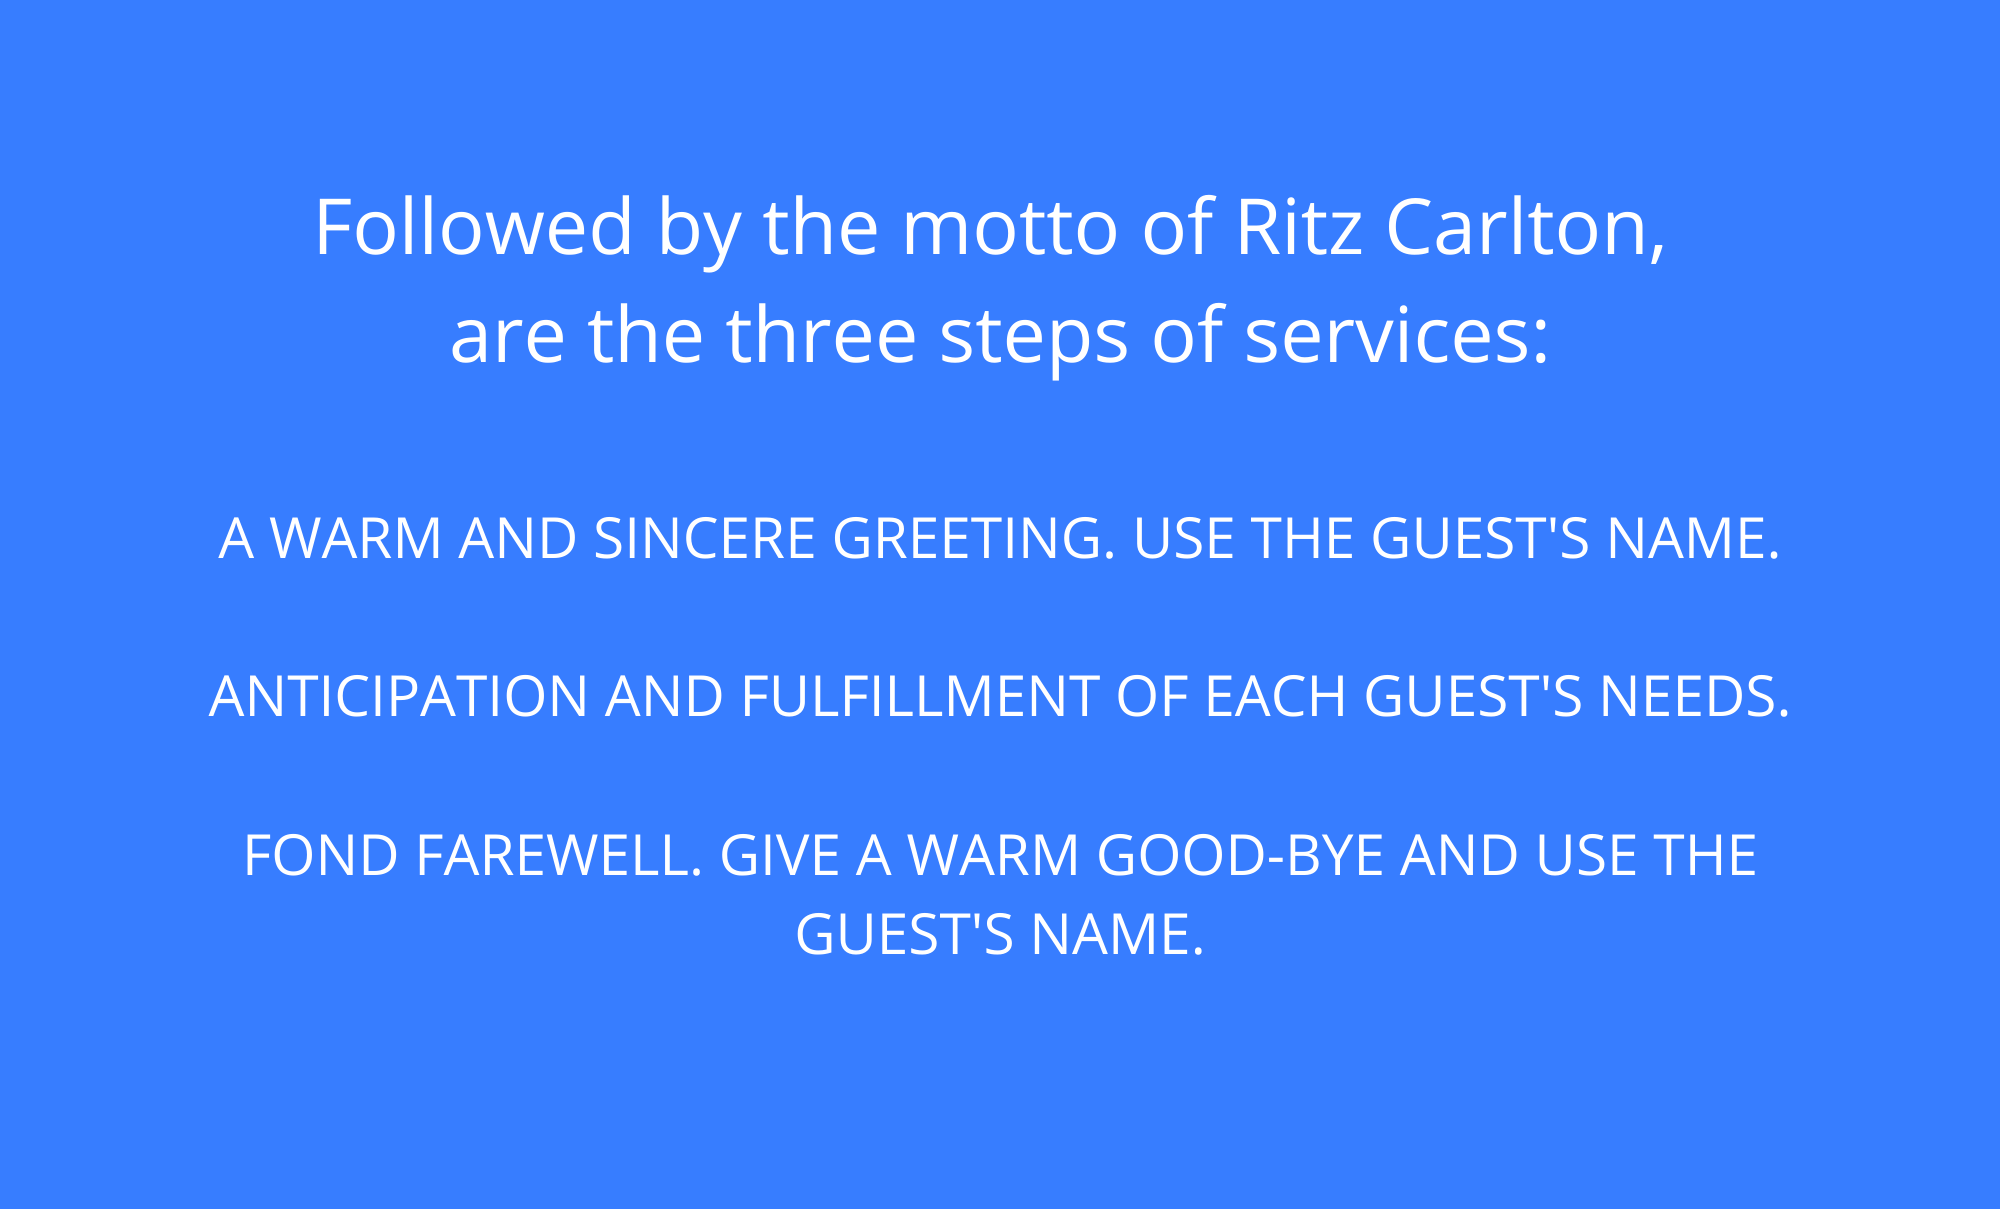 Customer Support Case Study (the Ritz Carlton Golden Standard of Customer Support)